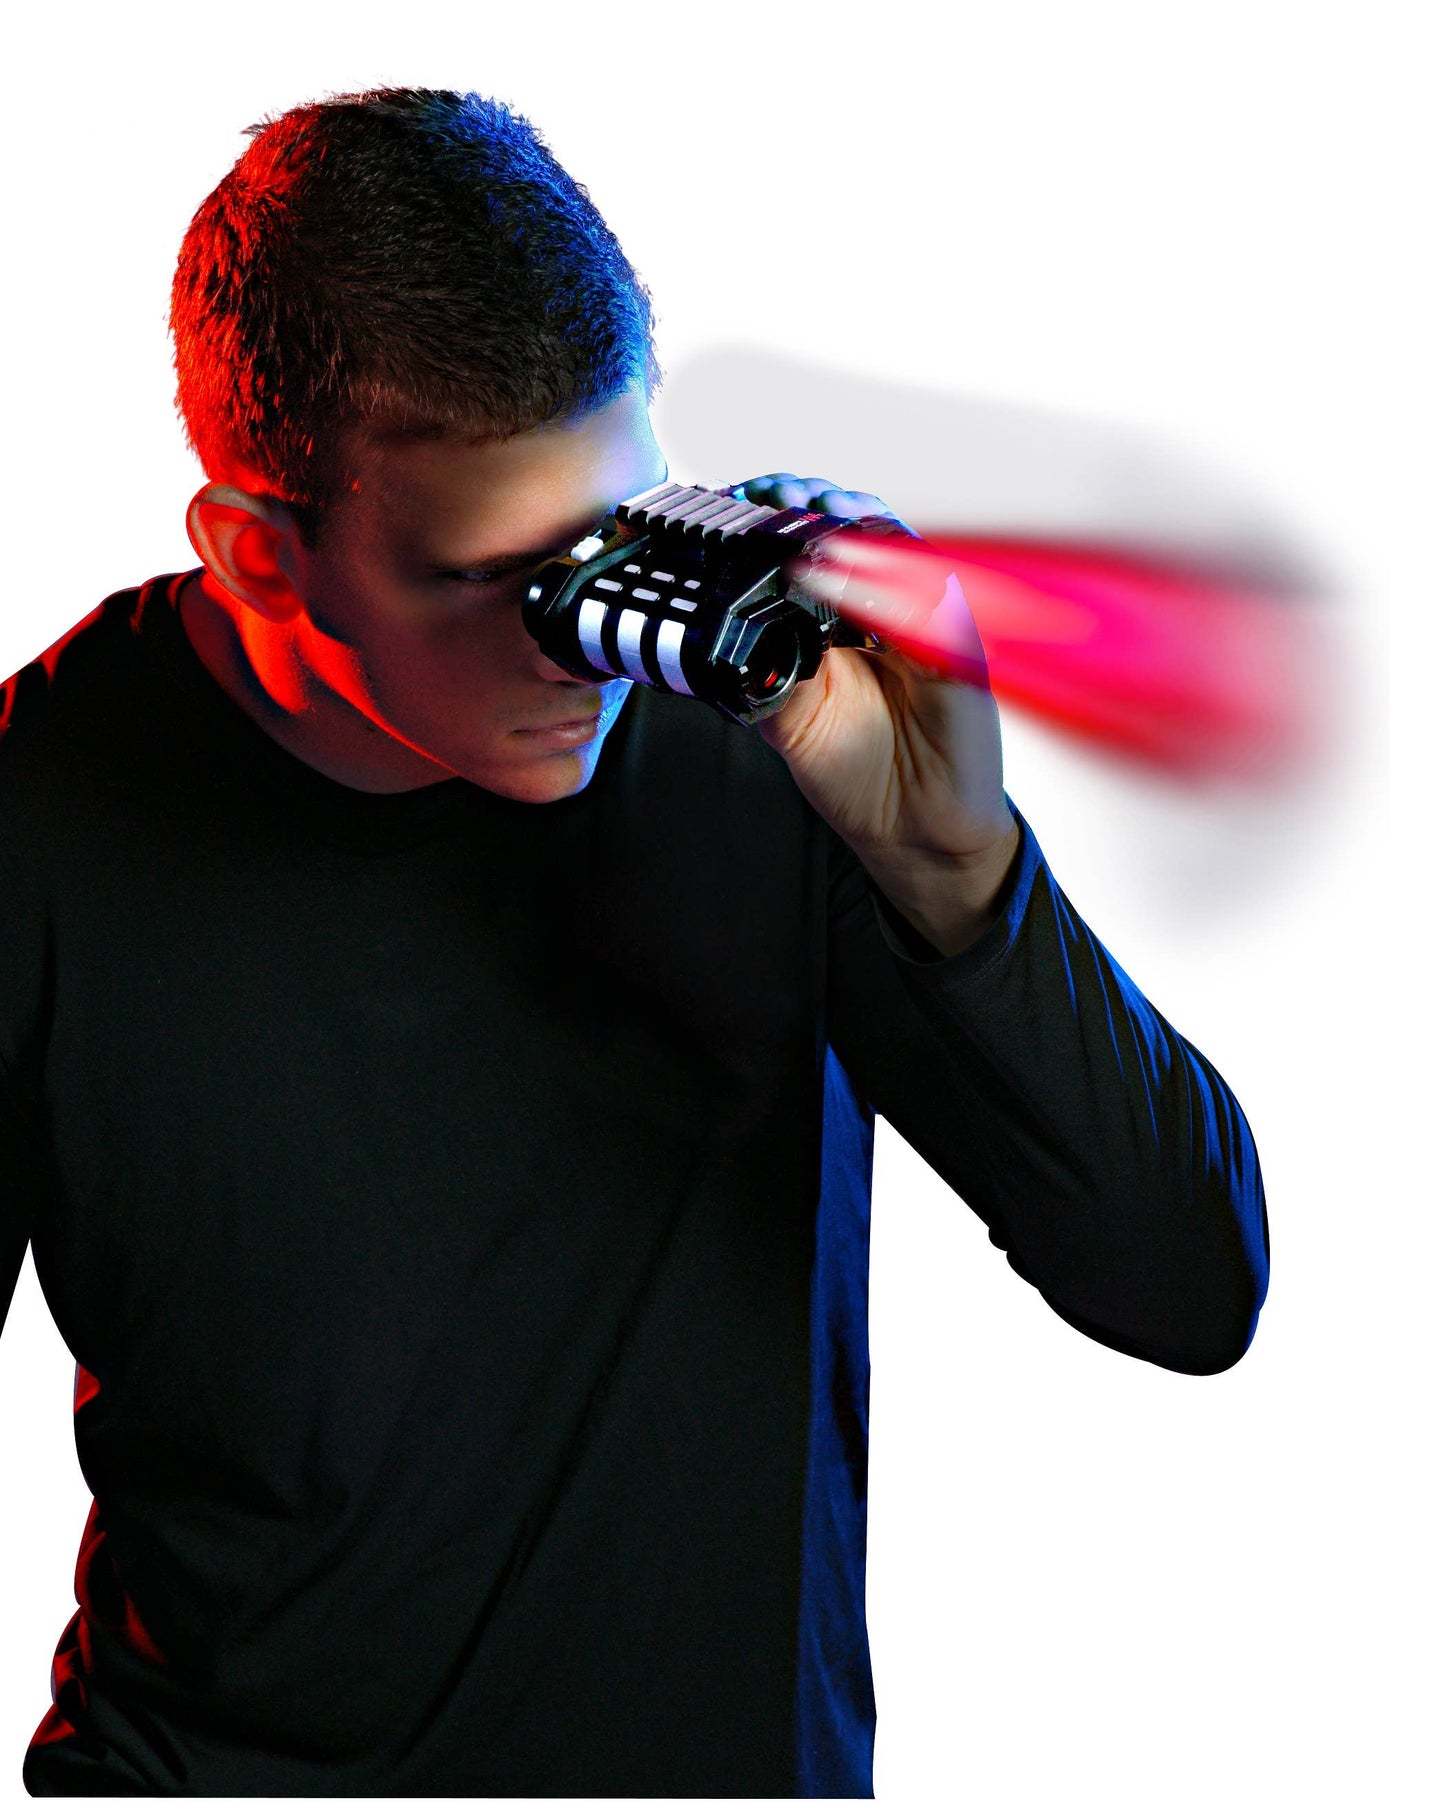 MukikiM - SpyX Night Nocs - Red/White Stealth Mode Binoculars (~25 ft)